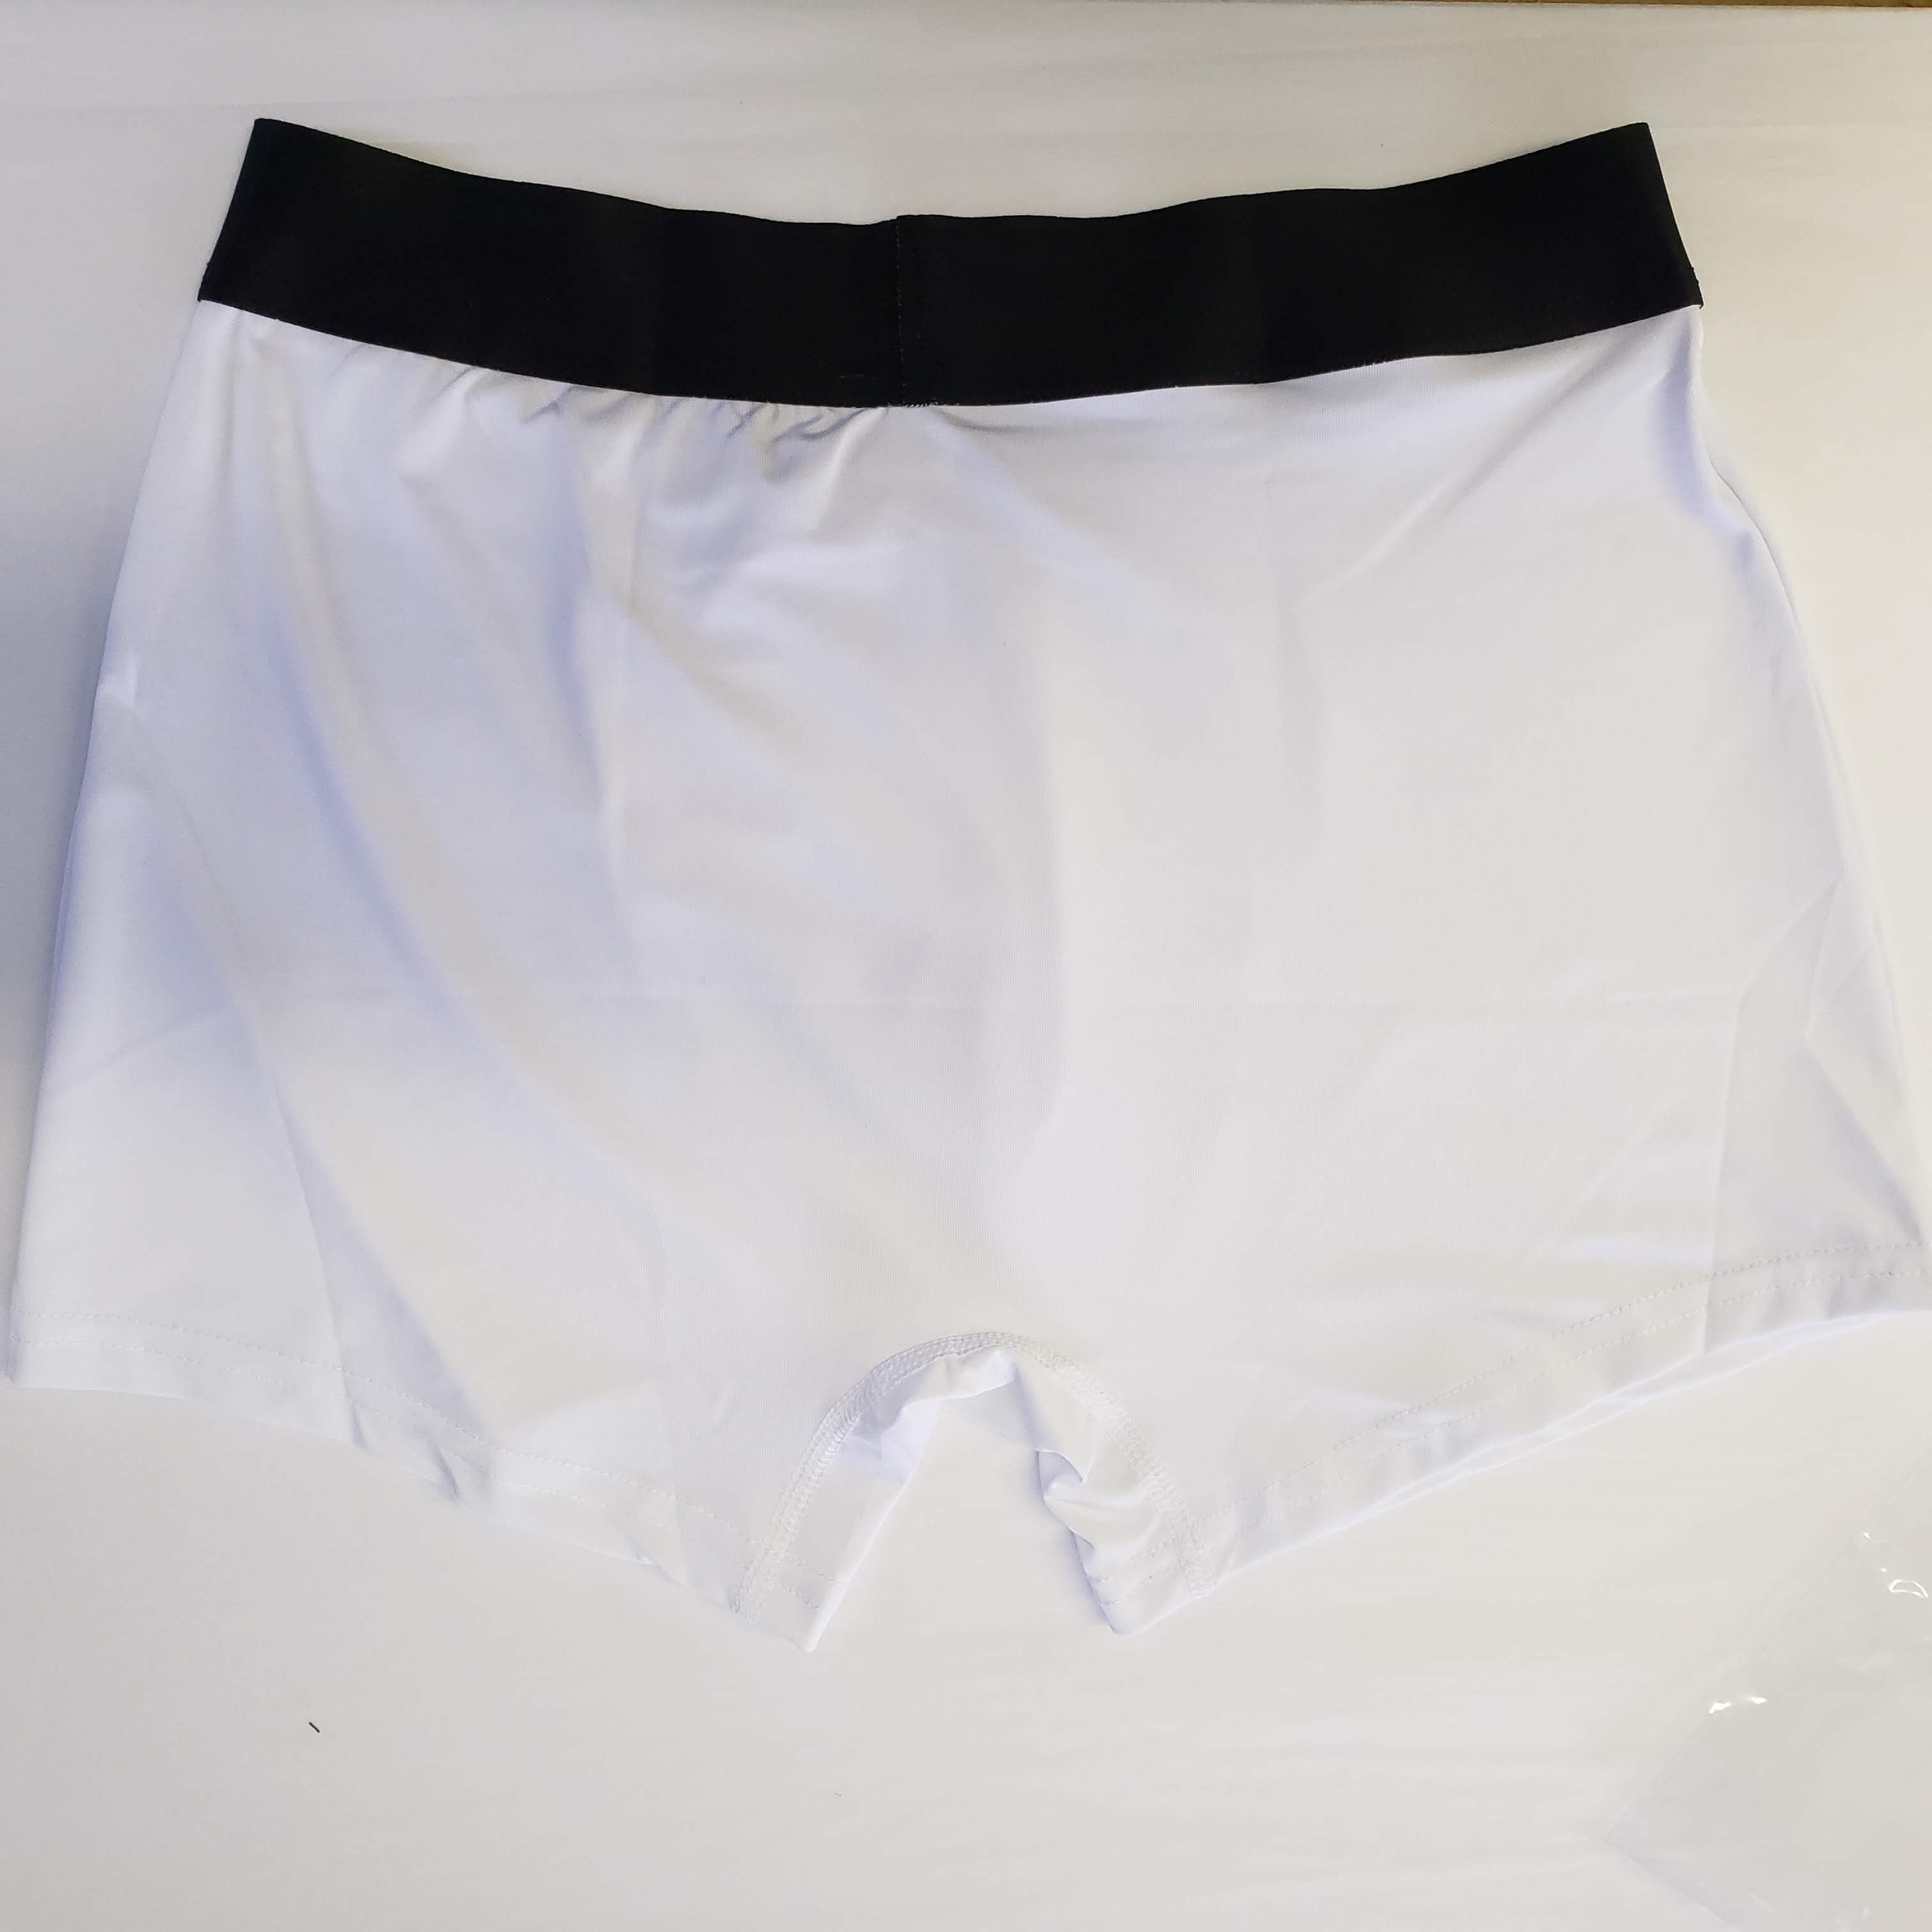 Mens Boxer & Brief Sublimation Underwear Blank 100% Polyester